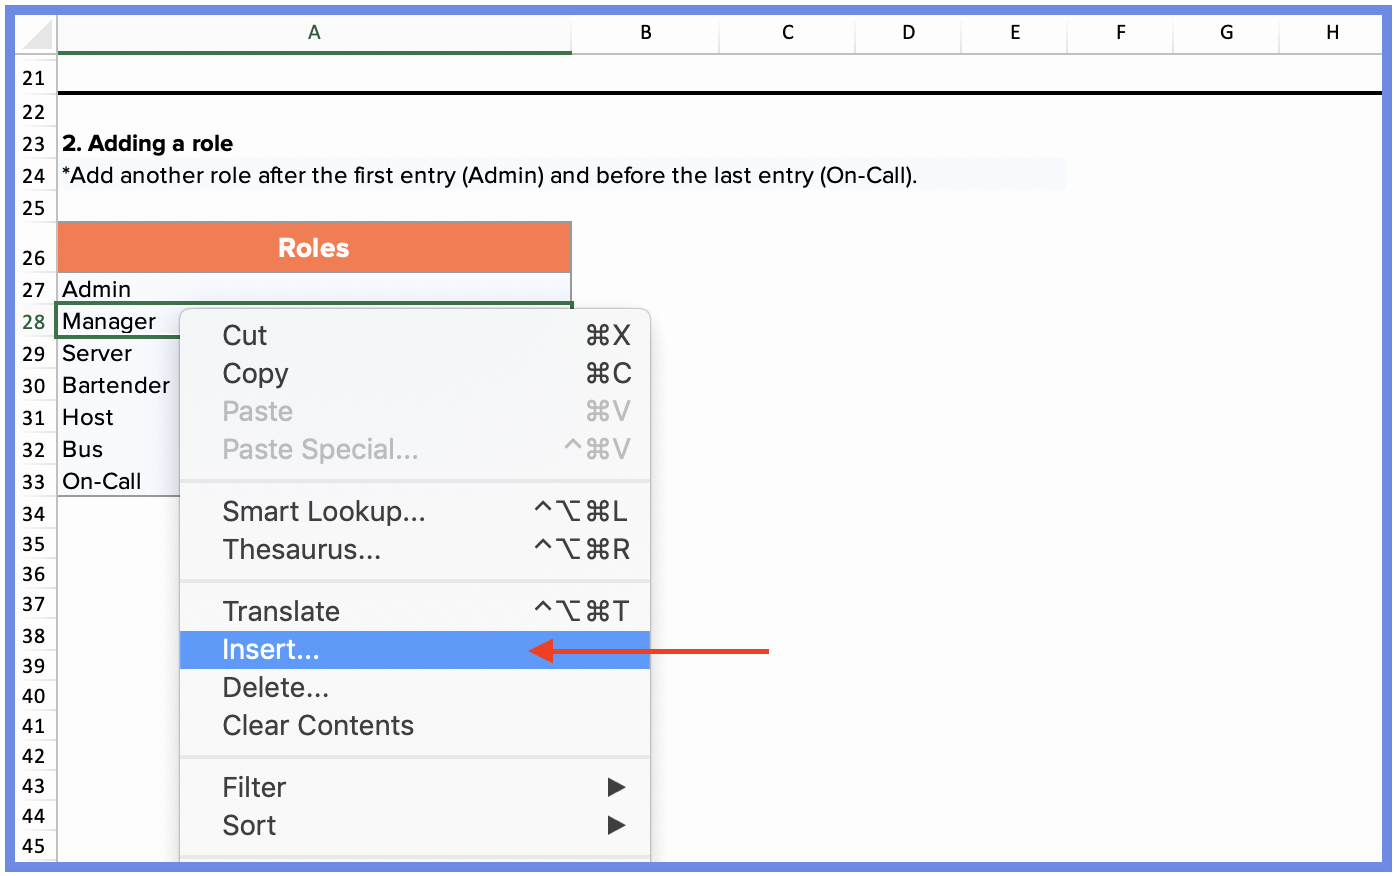 Restaurant Work Schedule Template New How to Make A Restaurant Work Schedule with Free Excel